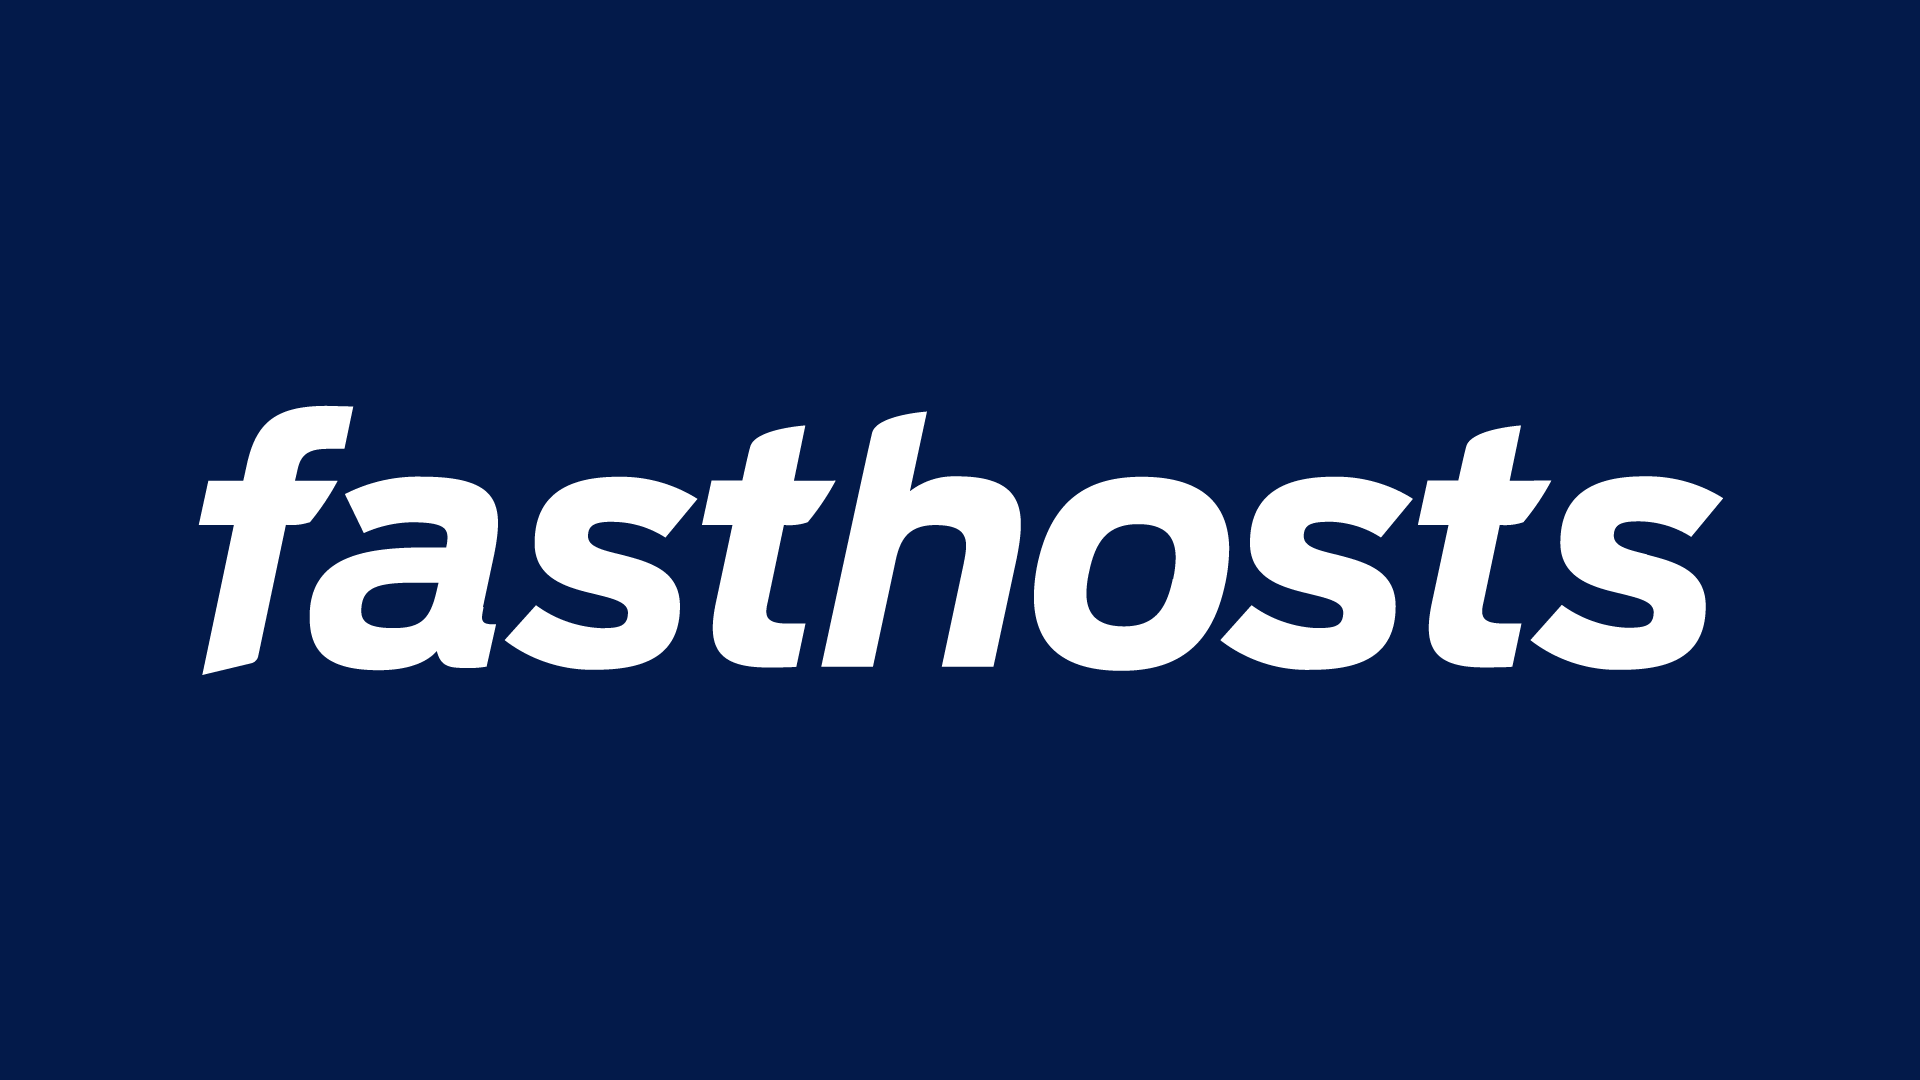 Fasthosts logo in white on dark blue background